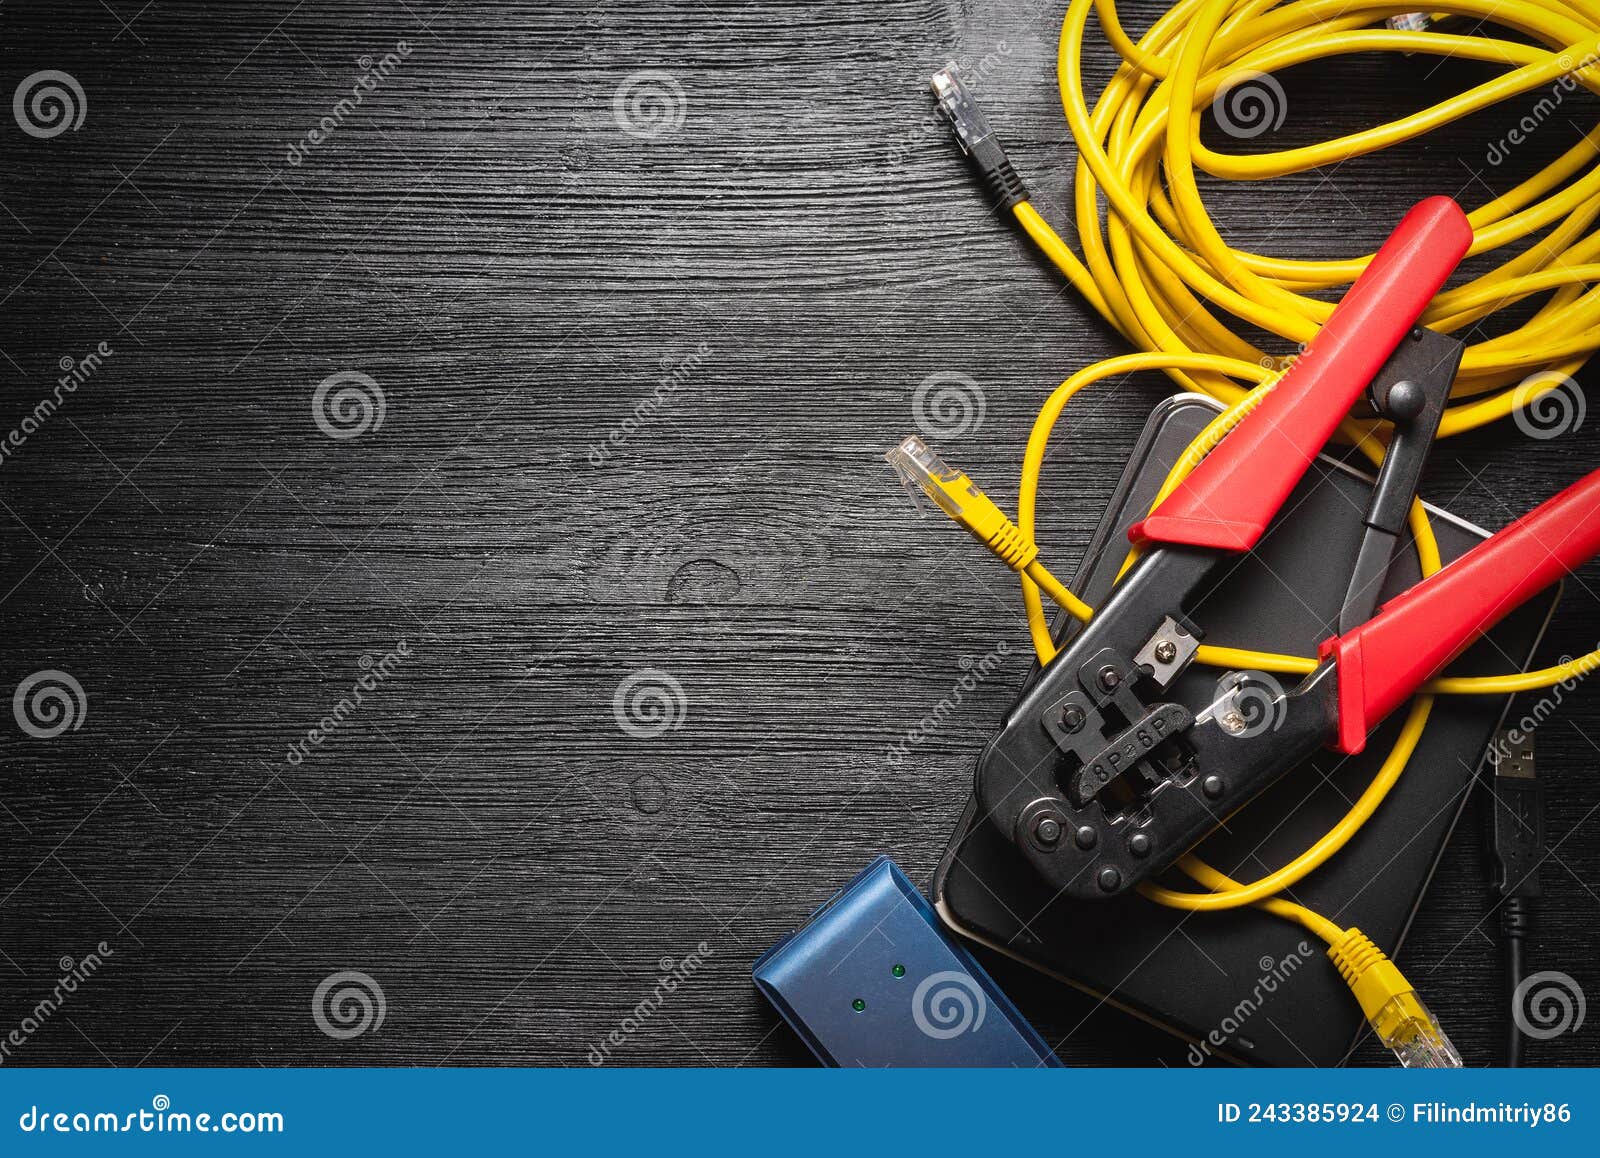 computer network cable crimper